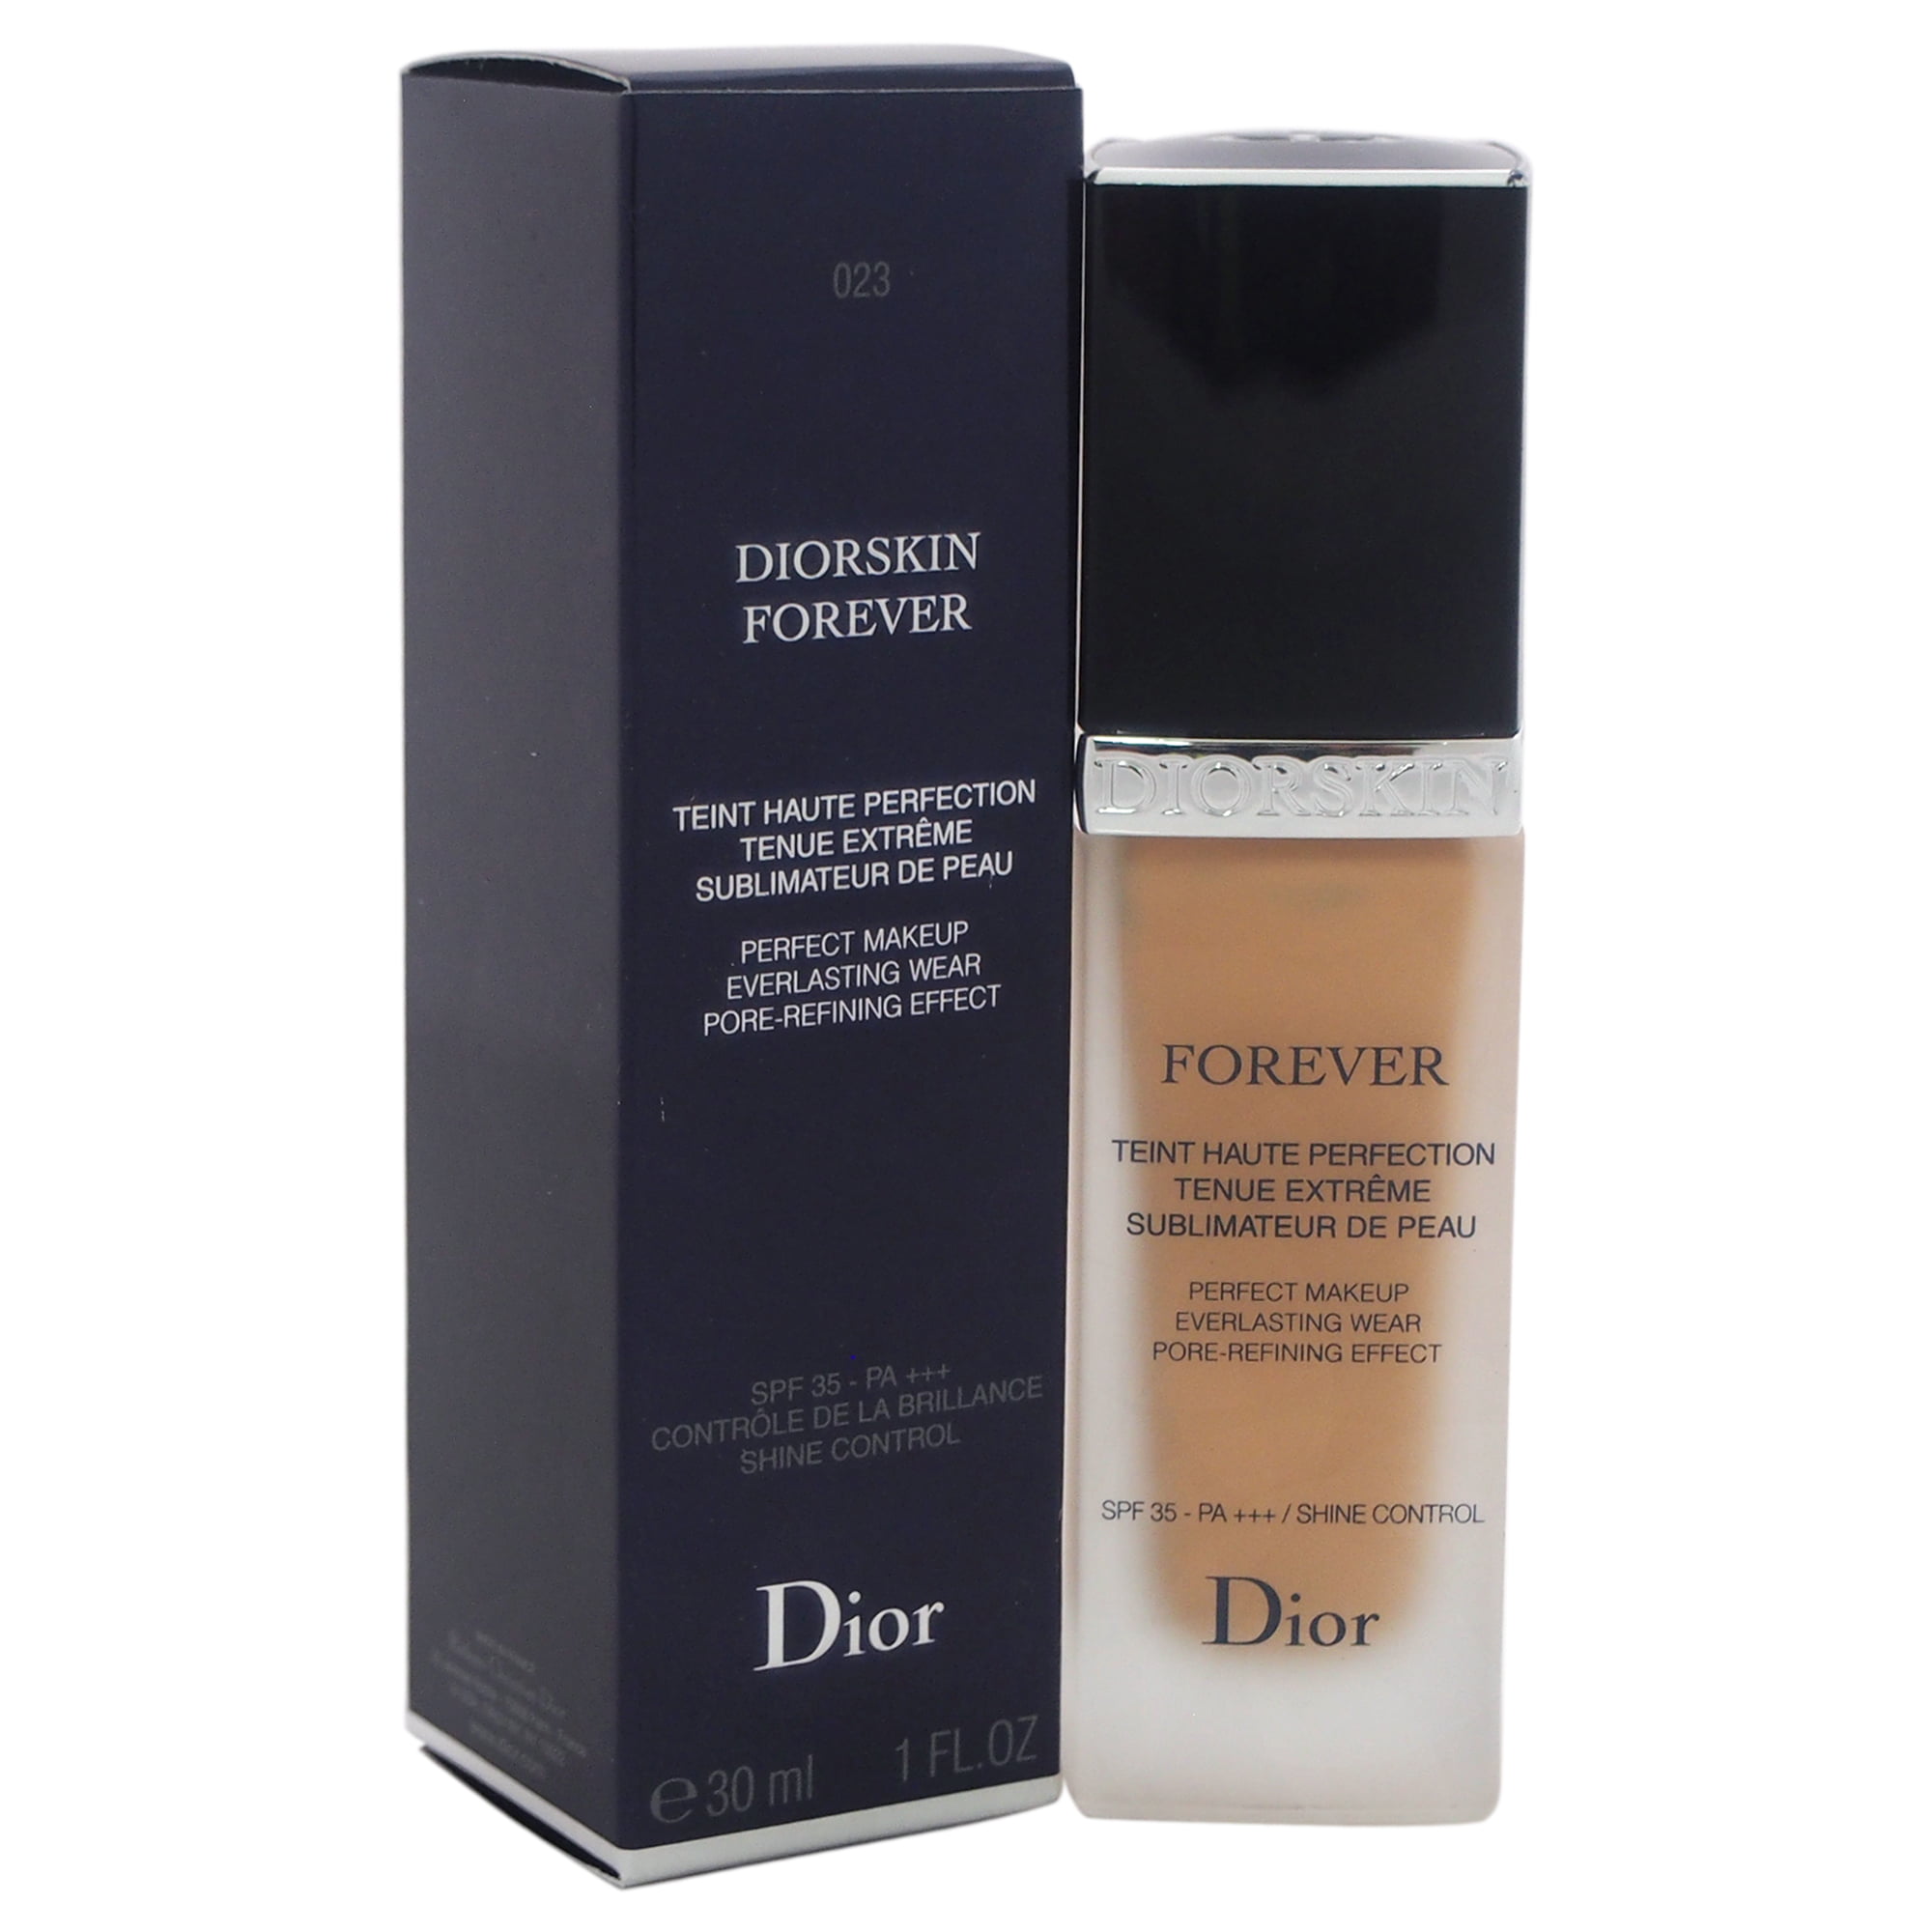 Diorskin Forever Perfect Makeup Everlasting Wear Pore-Refining SPF35 # 023  Peach by Christian Dior for Women - 1 oz Foundation - Walmart.com